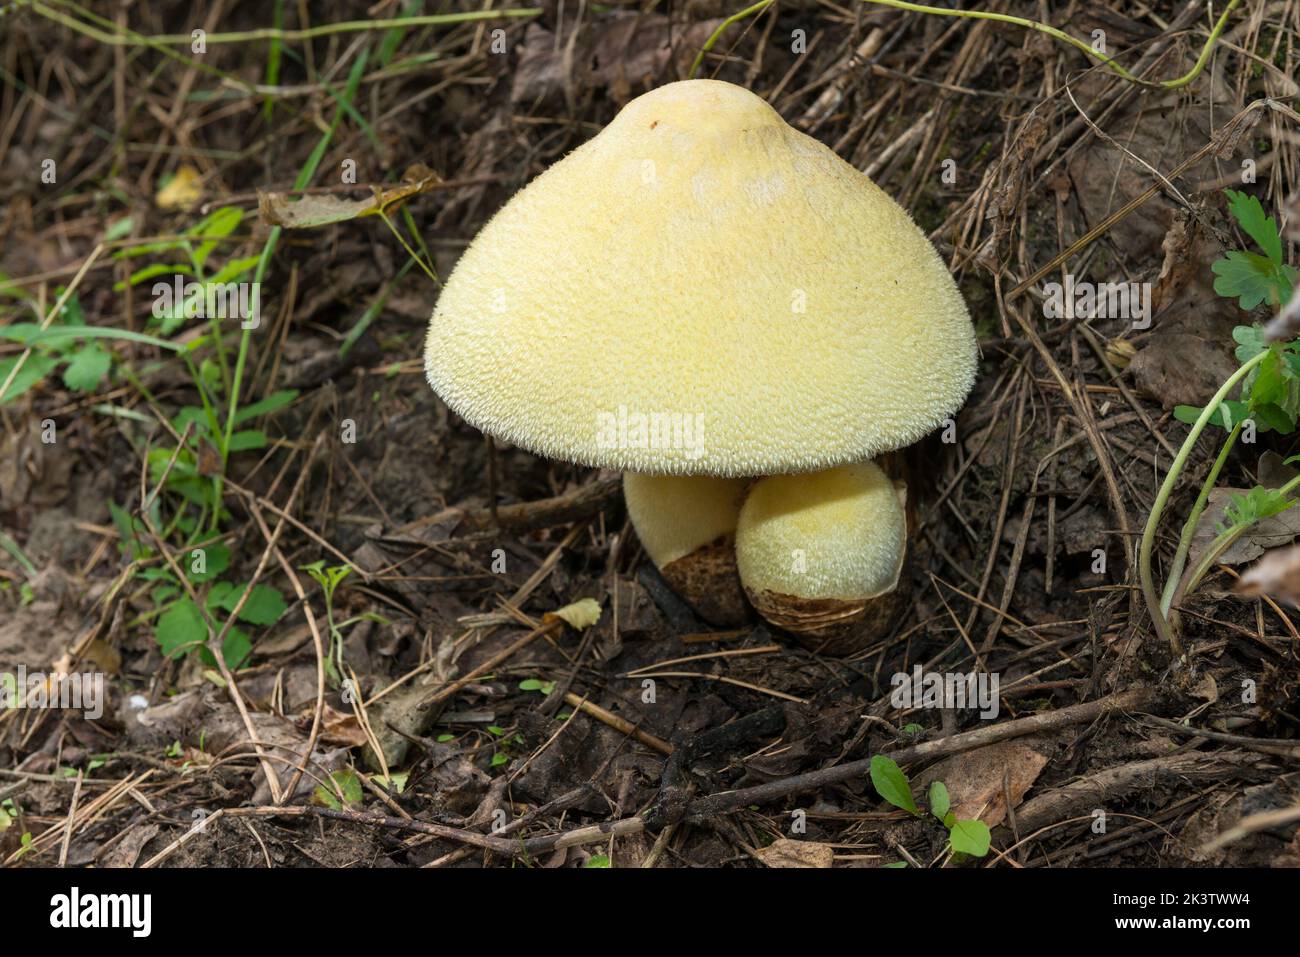 Volvariella bombycina, commonly known as the silky sheath, silky rosegill, silver-silk straw mushroom, or tree mushroom Stock Photo